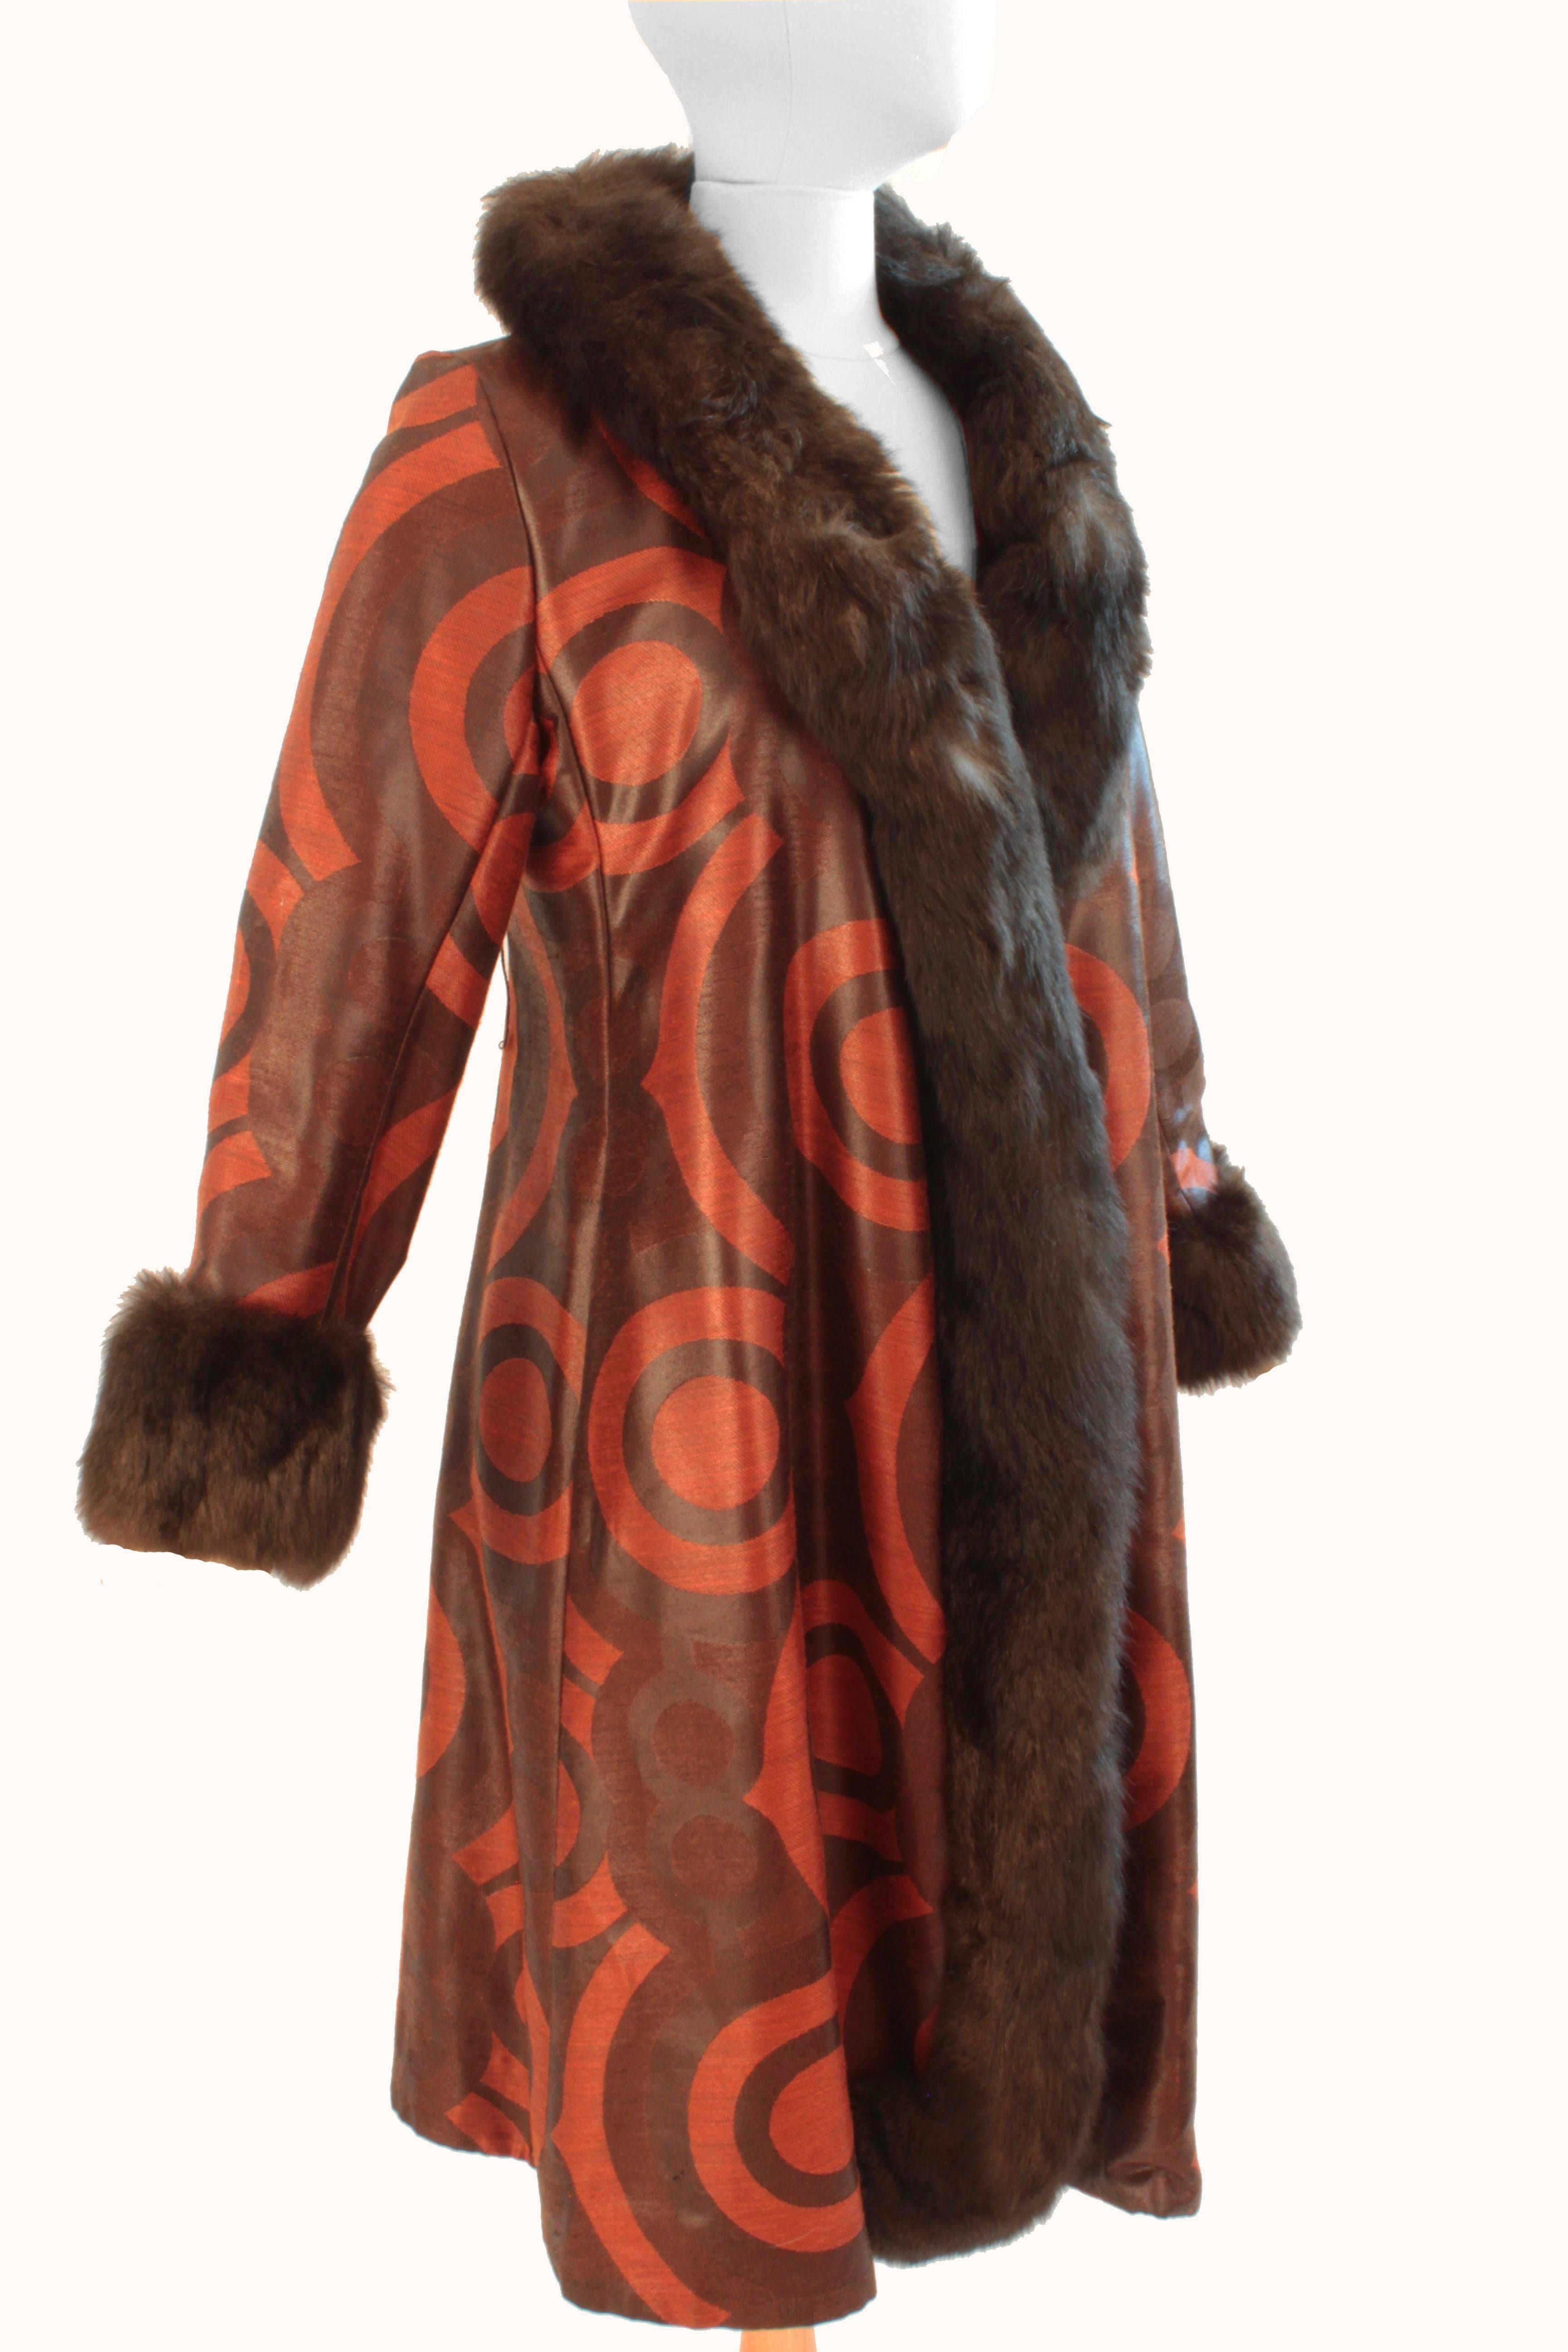 Women's Bill Blass Mod Bullseye Coat Woven Silk Mink Fur Trim 60s Vintage M